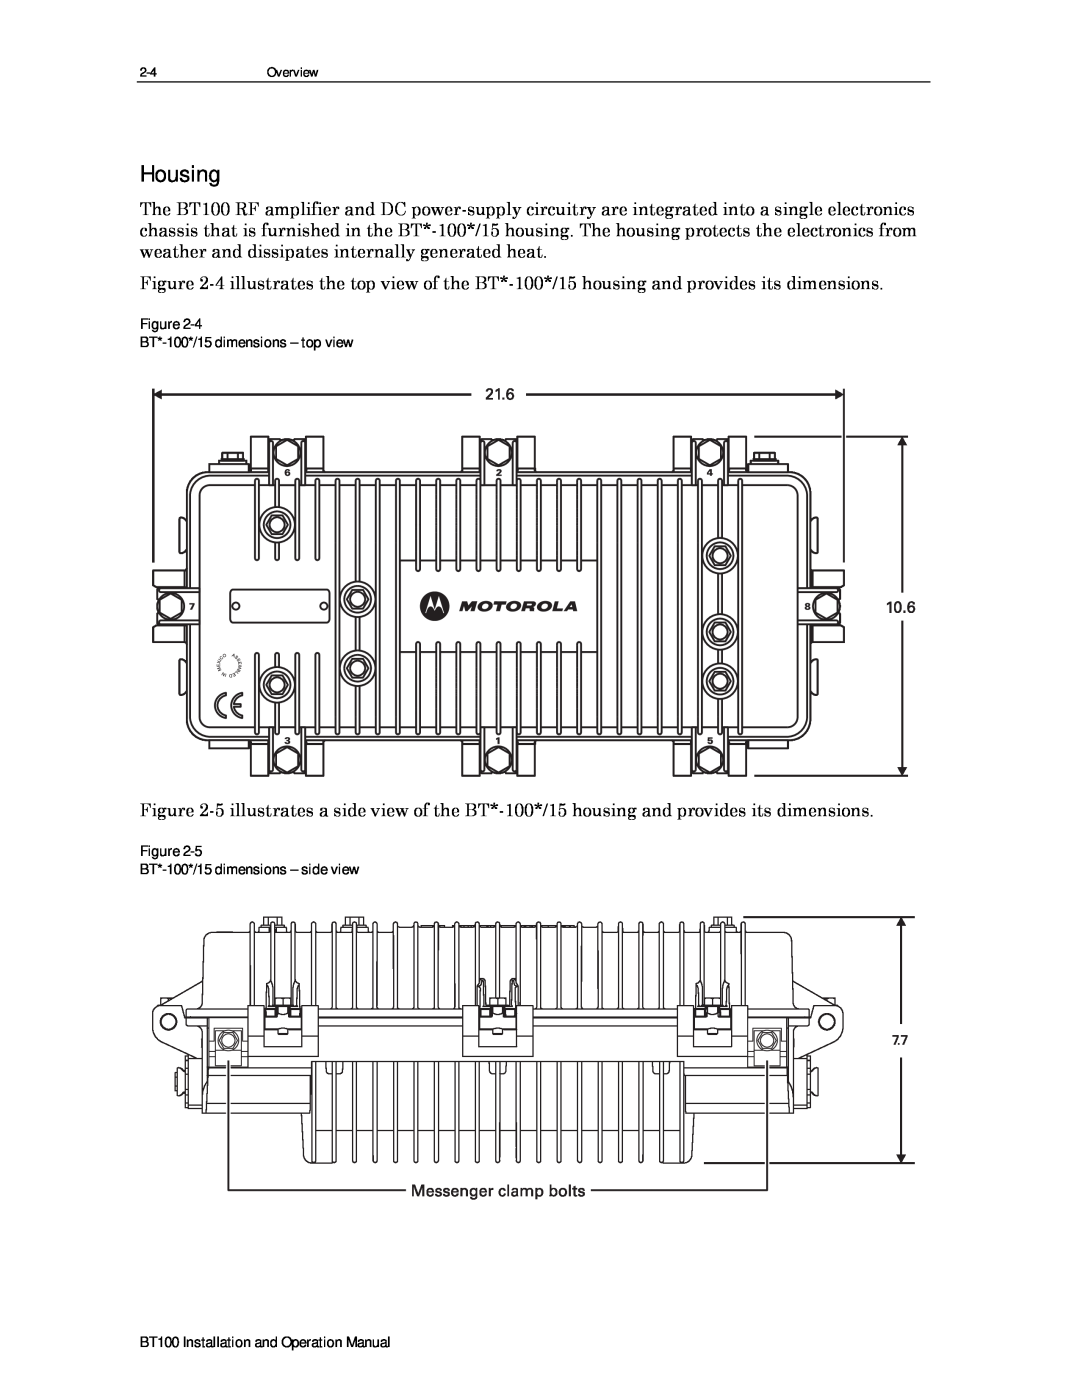 Motorola BT100 operation manual Housing, Figure BT*-100*/15dimensions - top view, Figure BT*-100*/15dimensions - side view 